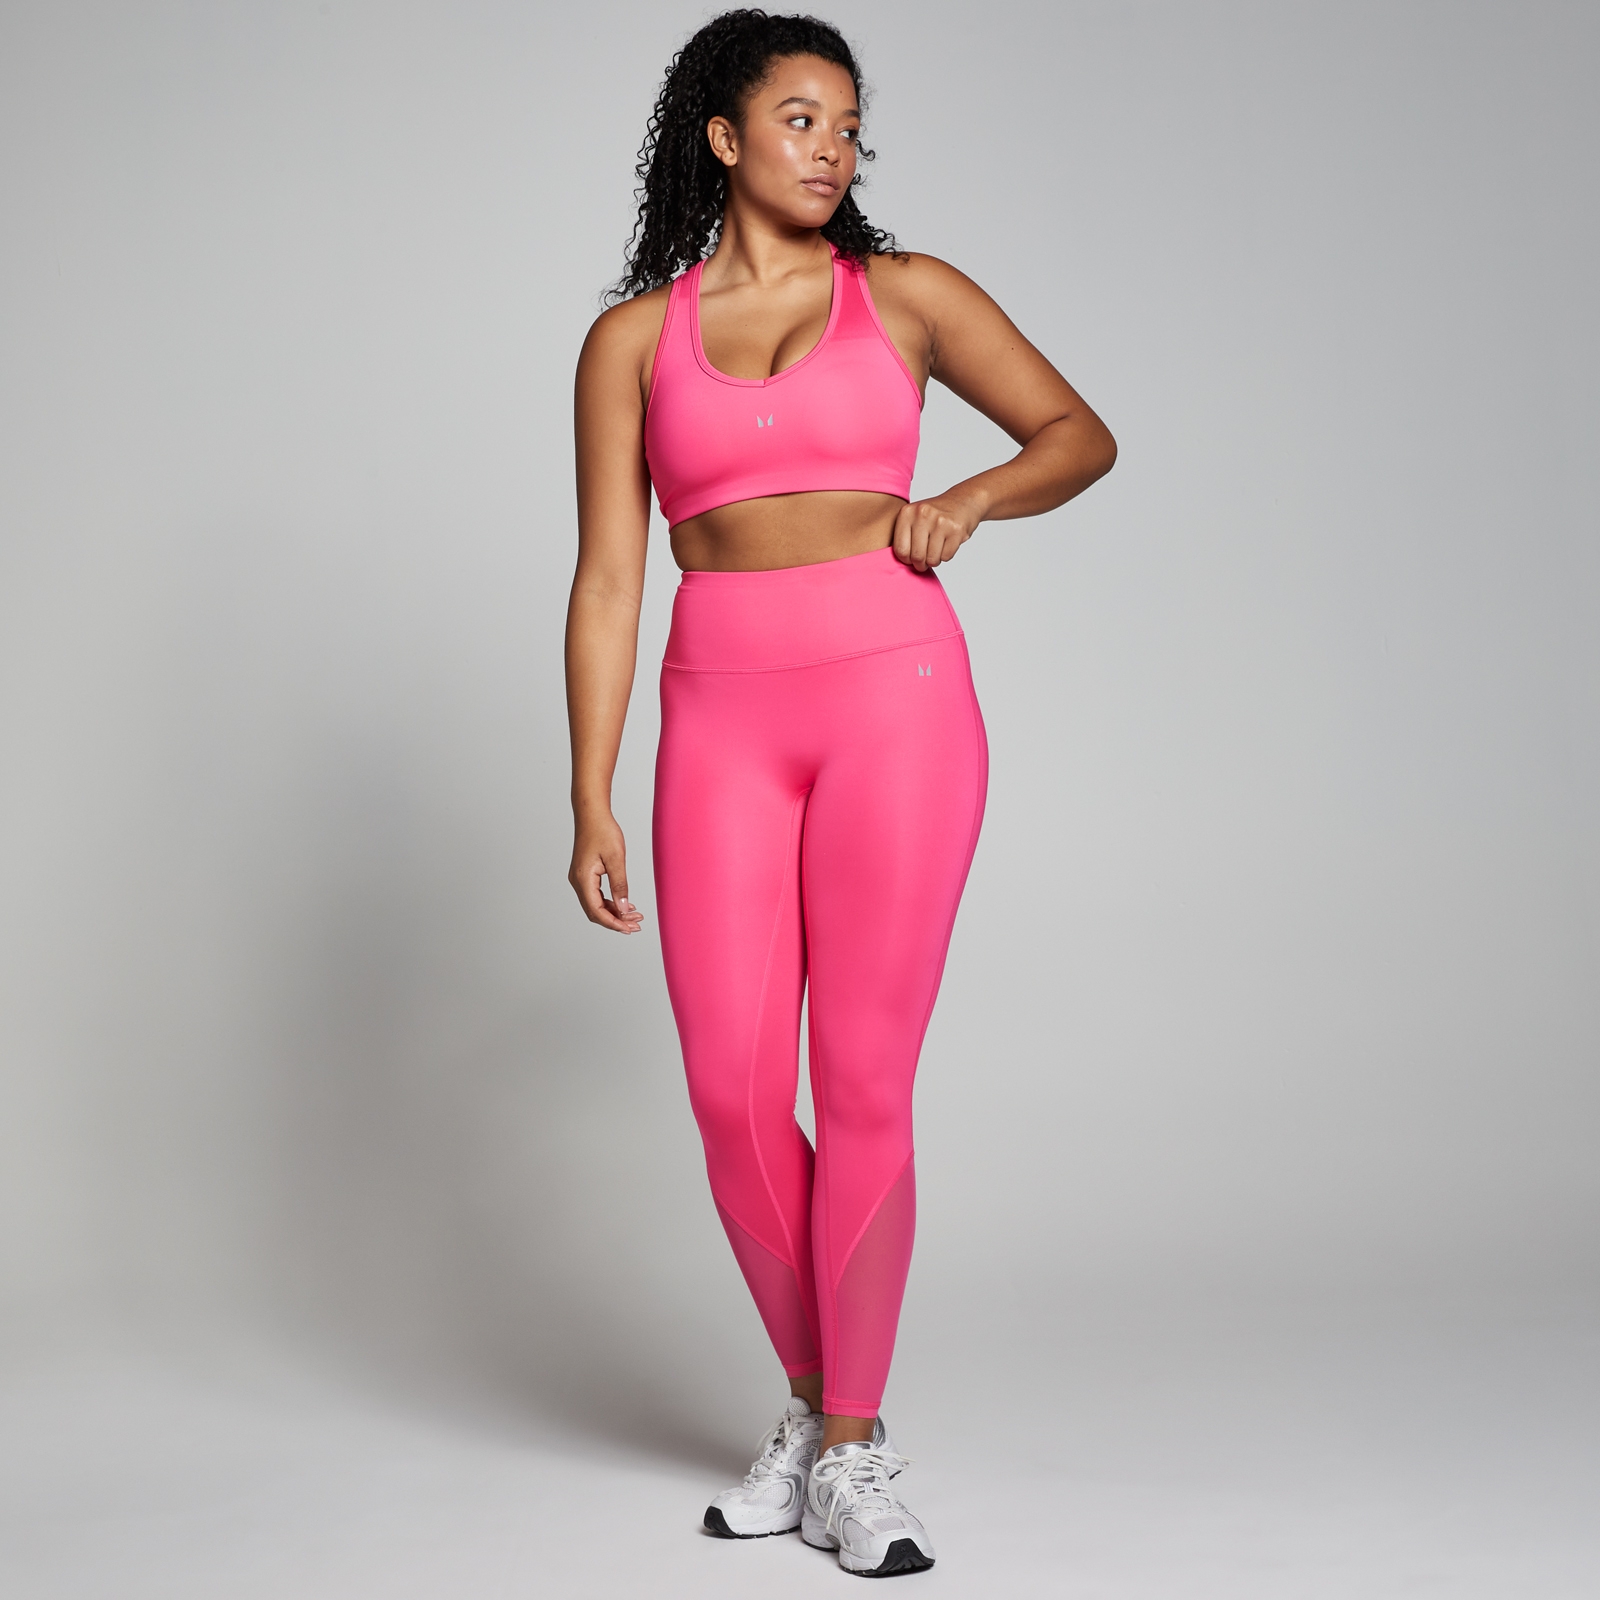 mp women's velocity leggings - hot pink  - xs